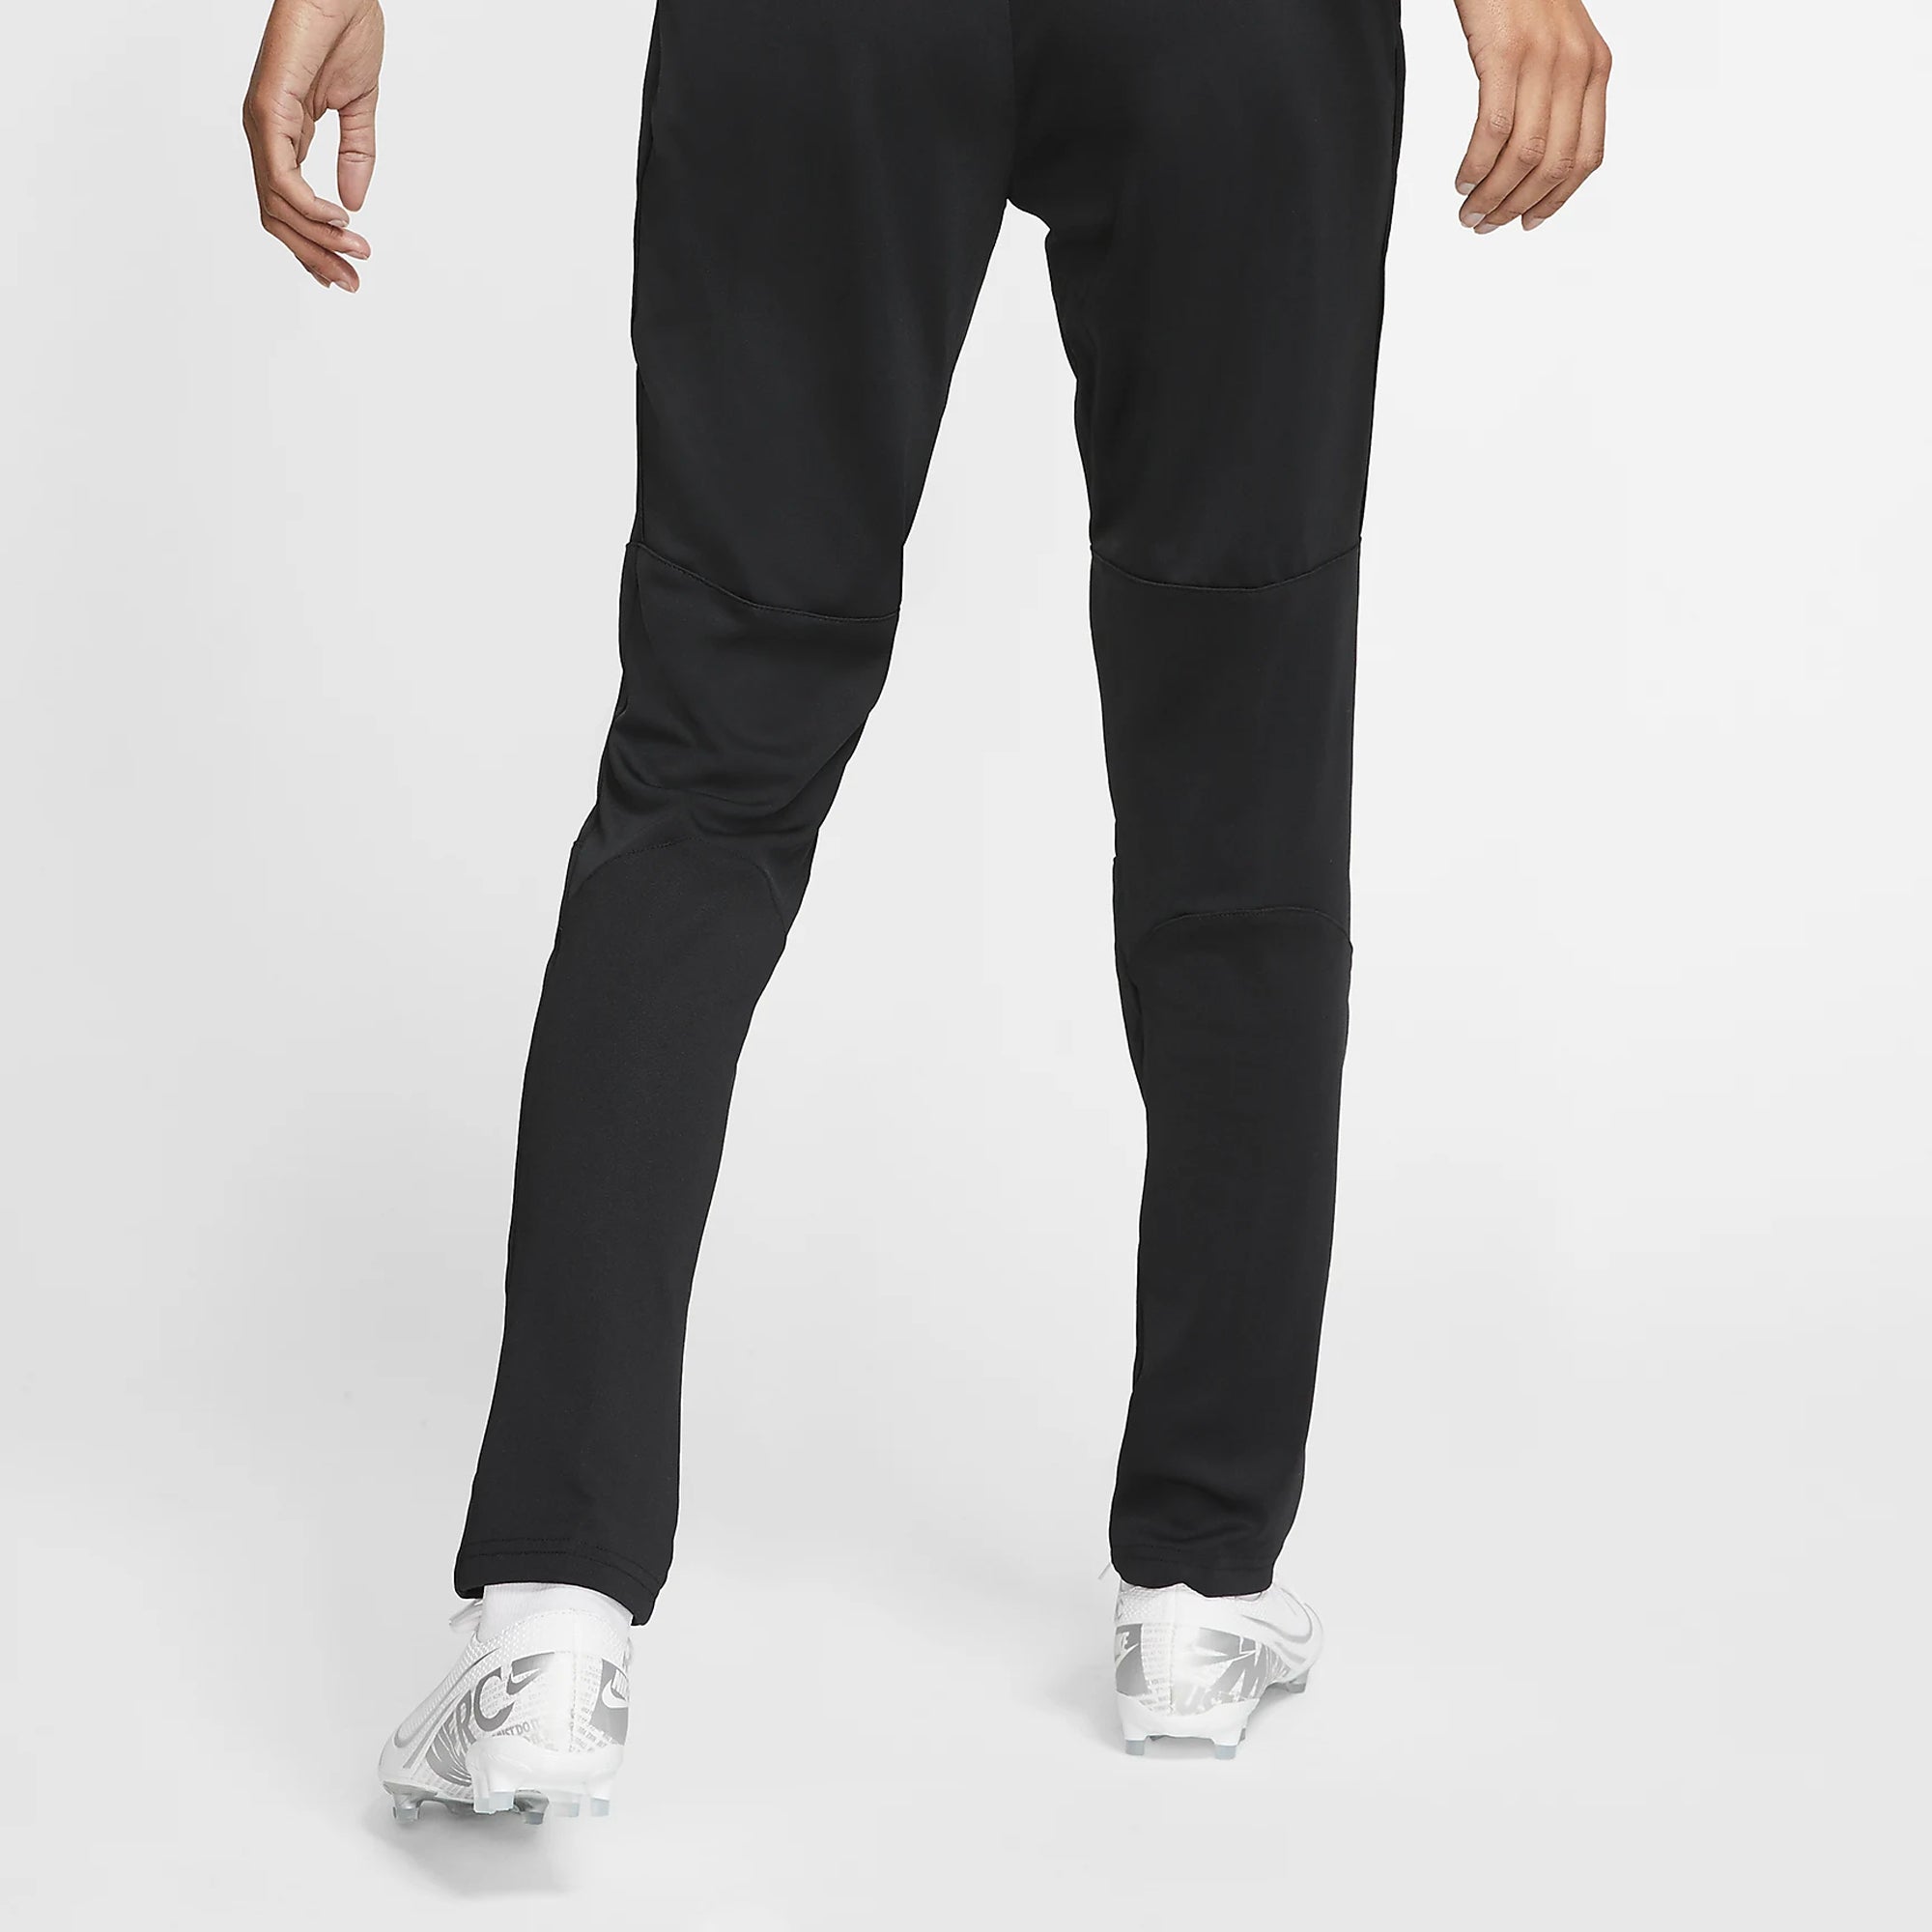 Nike Womens M Elastic Waistband Stretchy Athletic Dri Fit Pants Black